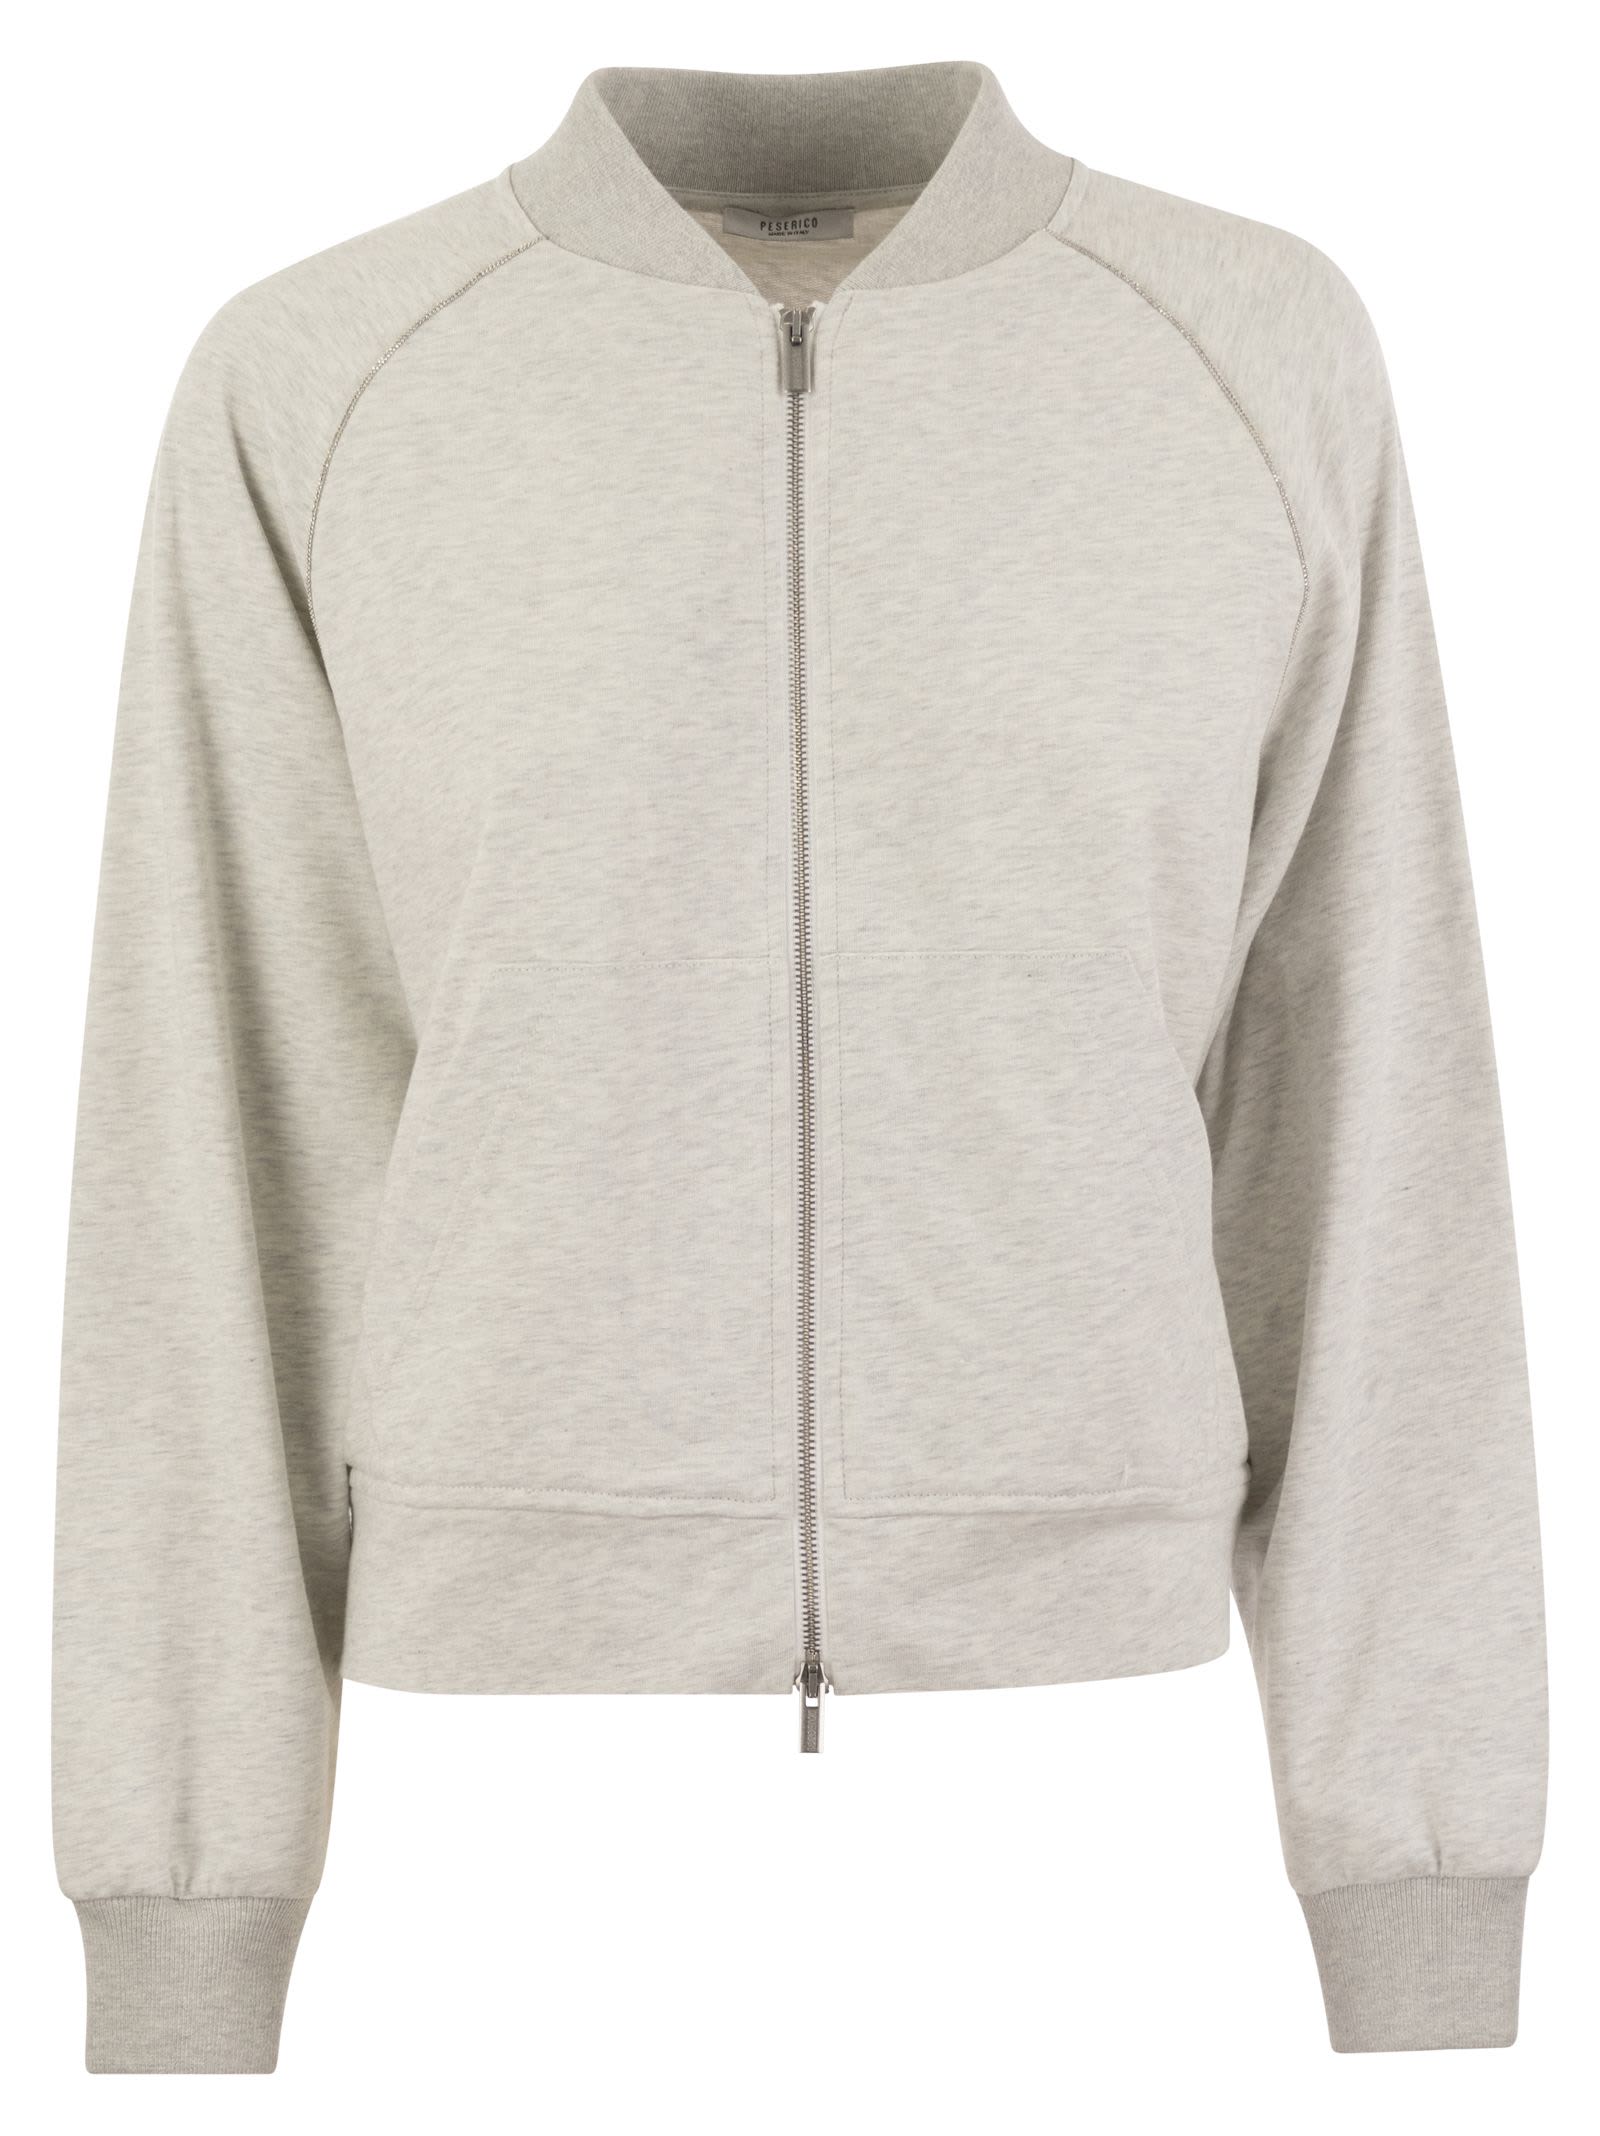 Sweatshirt In Cotton Mélange And Tricot Details